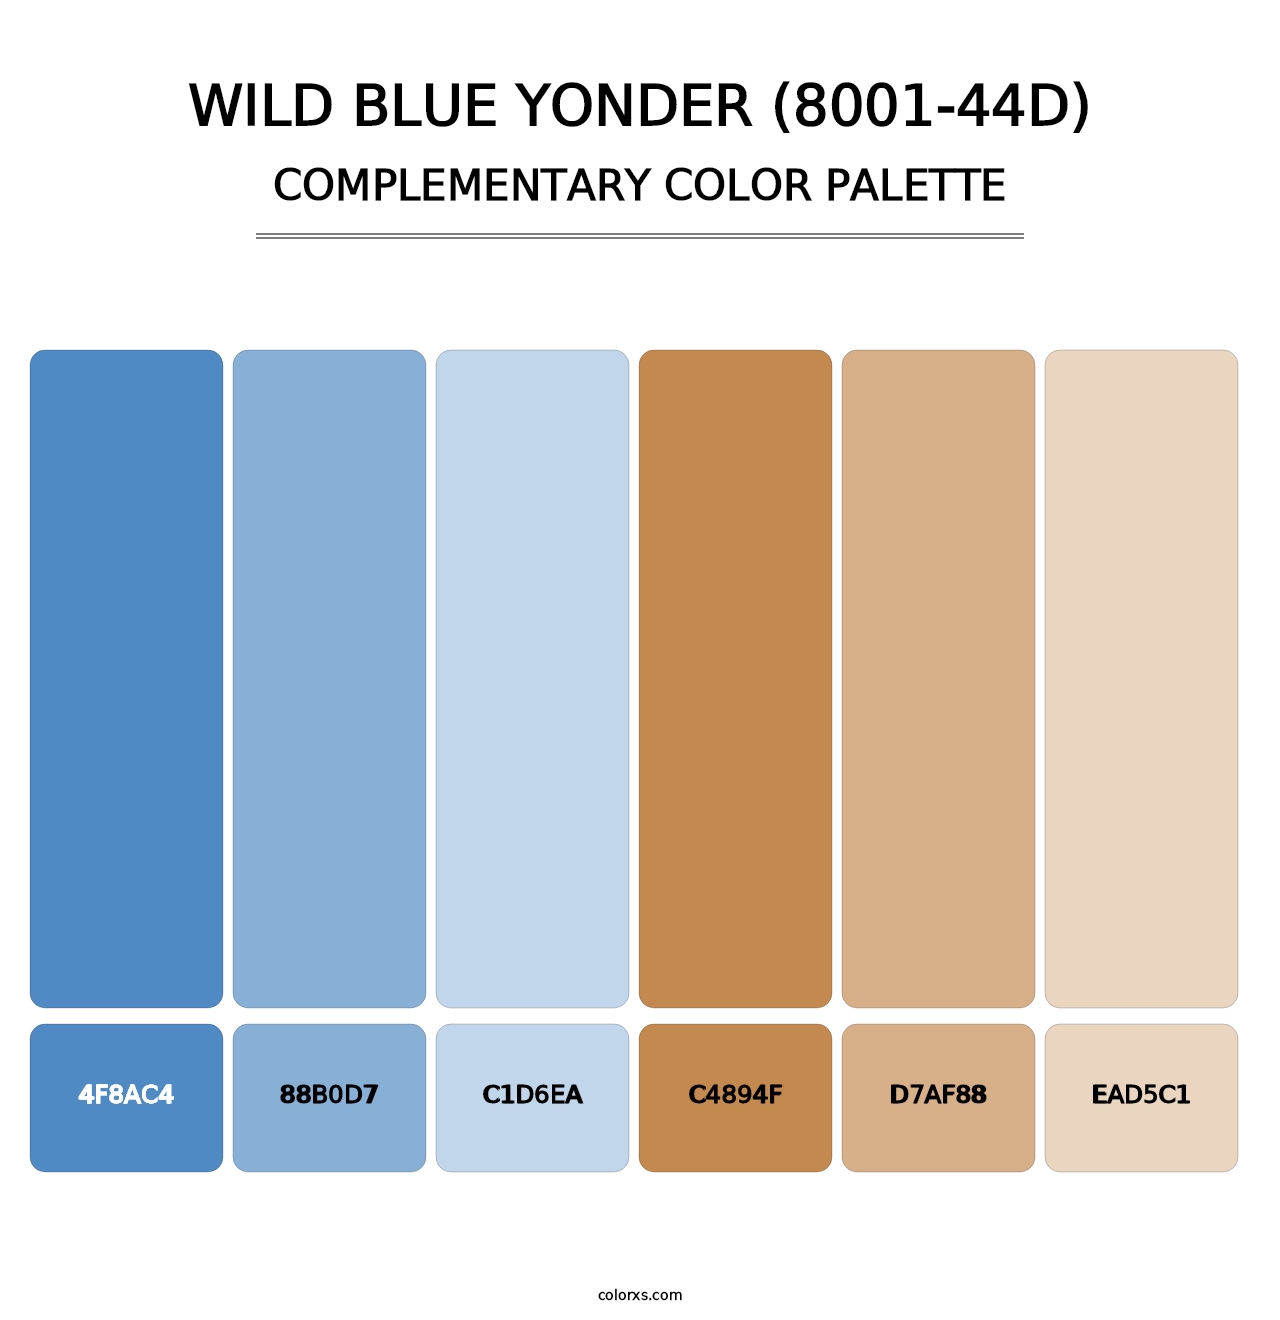 Wild Blue Yonder (8001-44D) - Complementary Color Palette